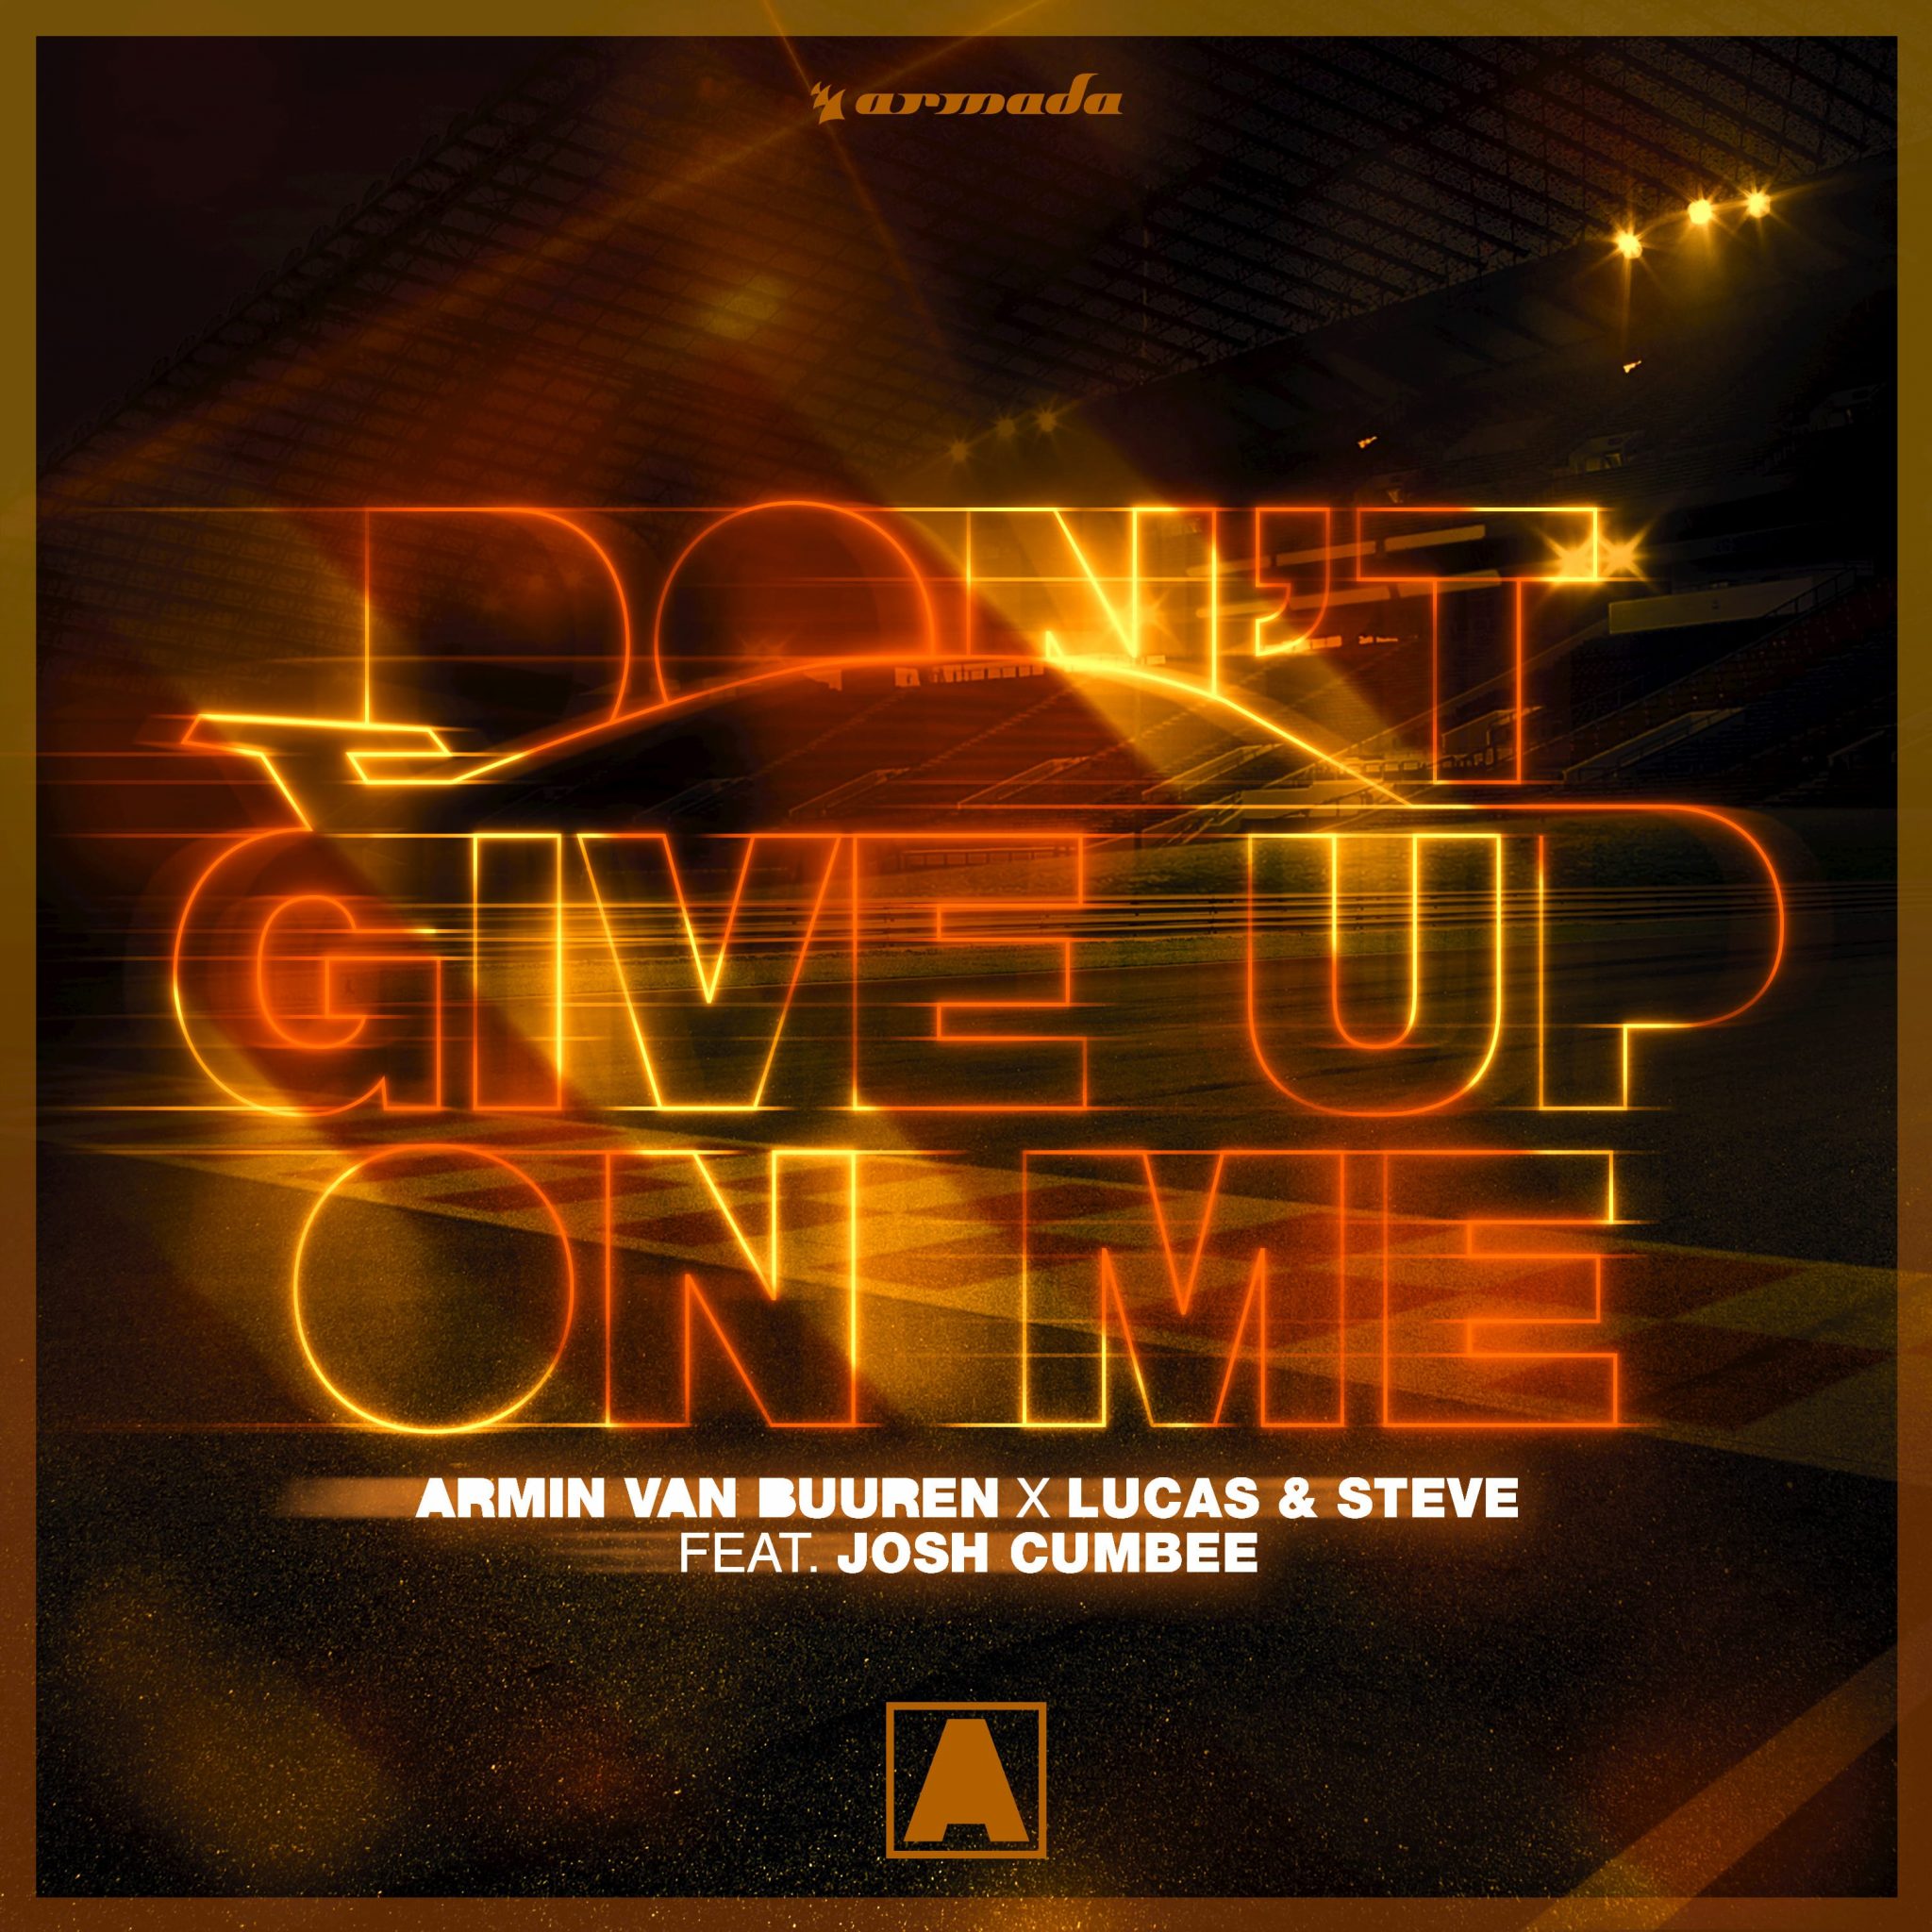 Armin van Burren, Lucas & Steve - Don’t Give Up On Me (feat. Josh Cumbee) [Pop-Dance]